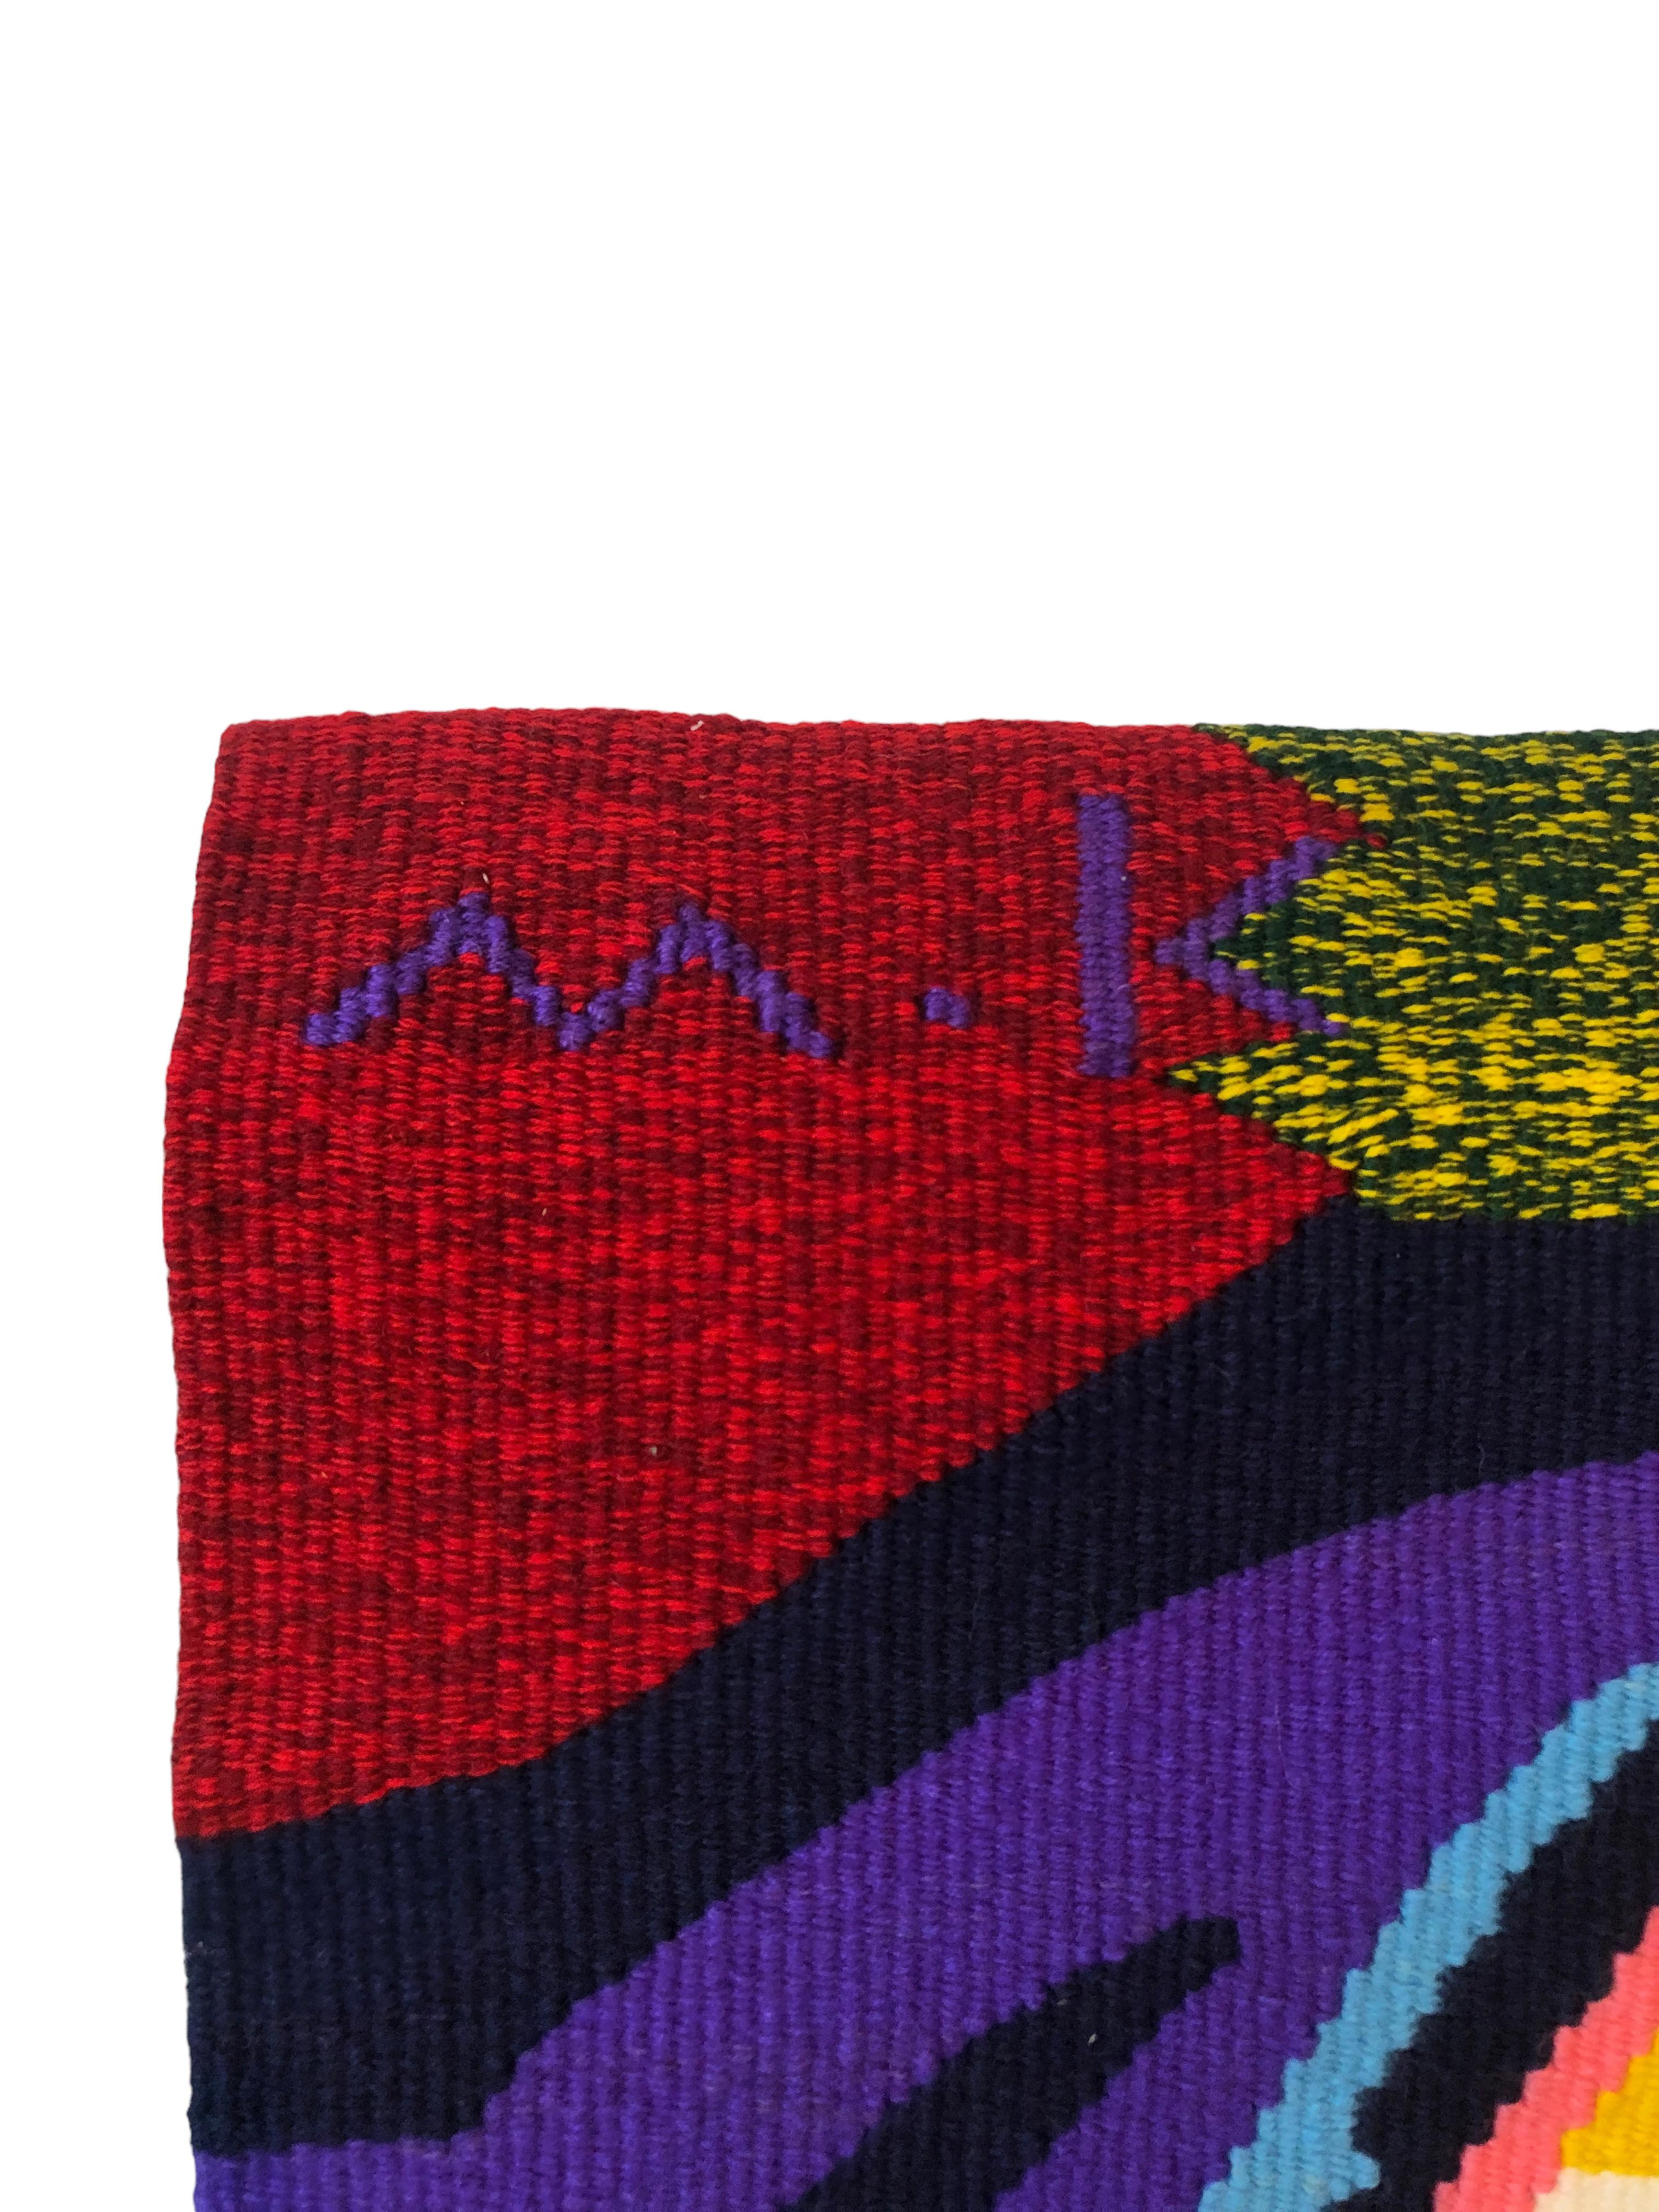  Israeli Hand Woven Colorful Wool Tapestry Weaving Menashe Kadishman Sheep Head  For Sale 6